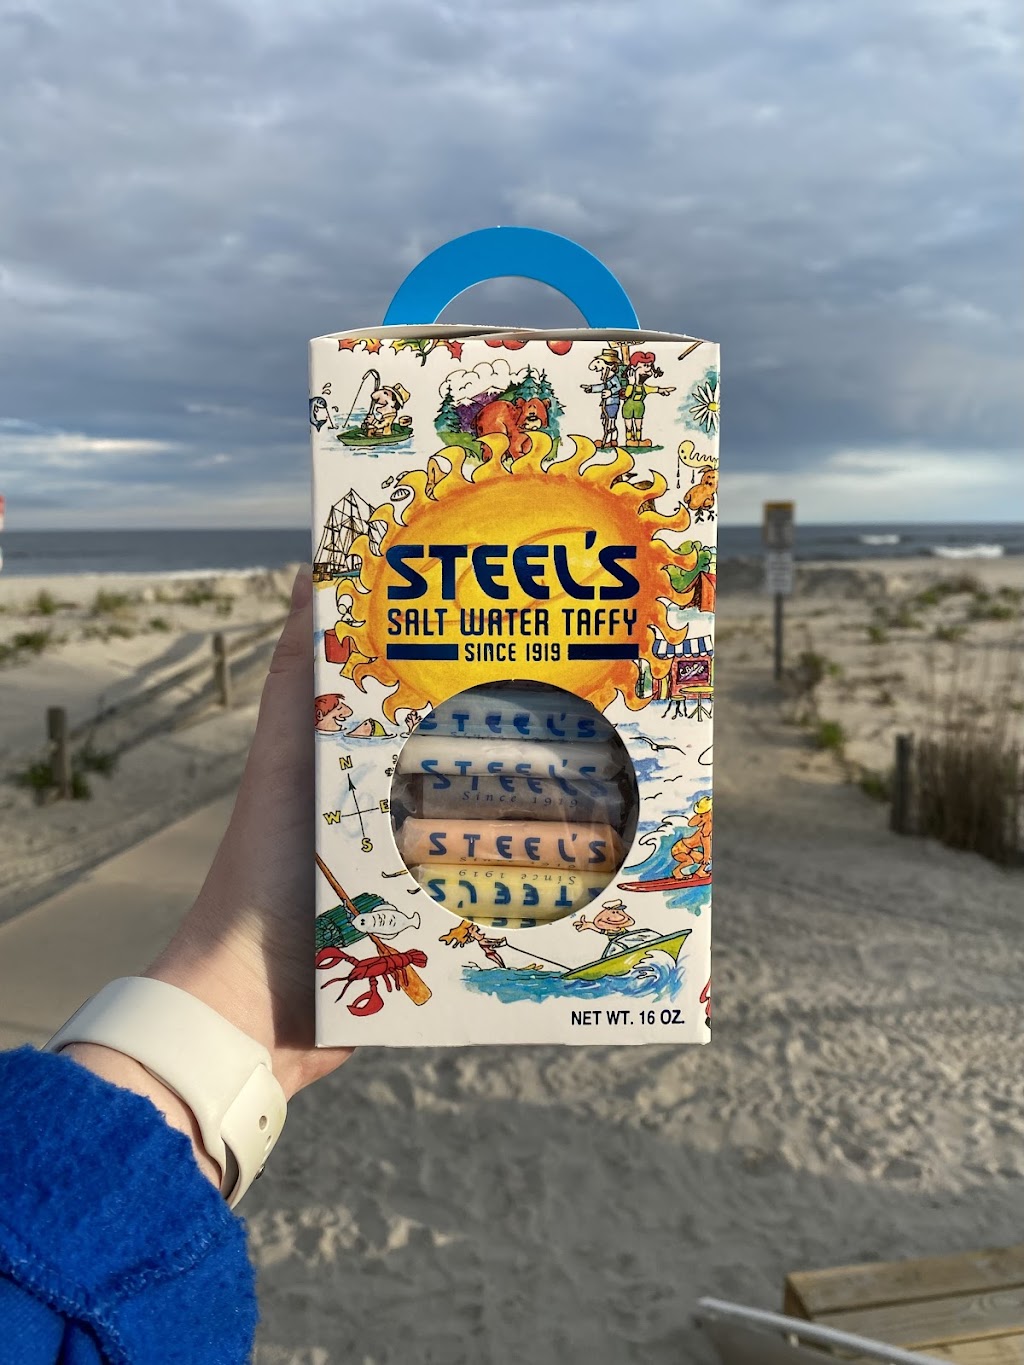 Steels Fudge Inc. | 1000 Boardwalk, Ocean City, NJ 08226 | Phone: (609) 398-2383